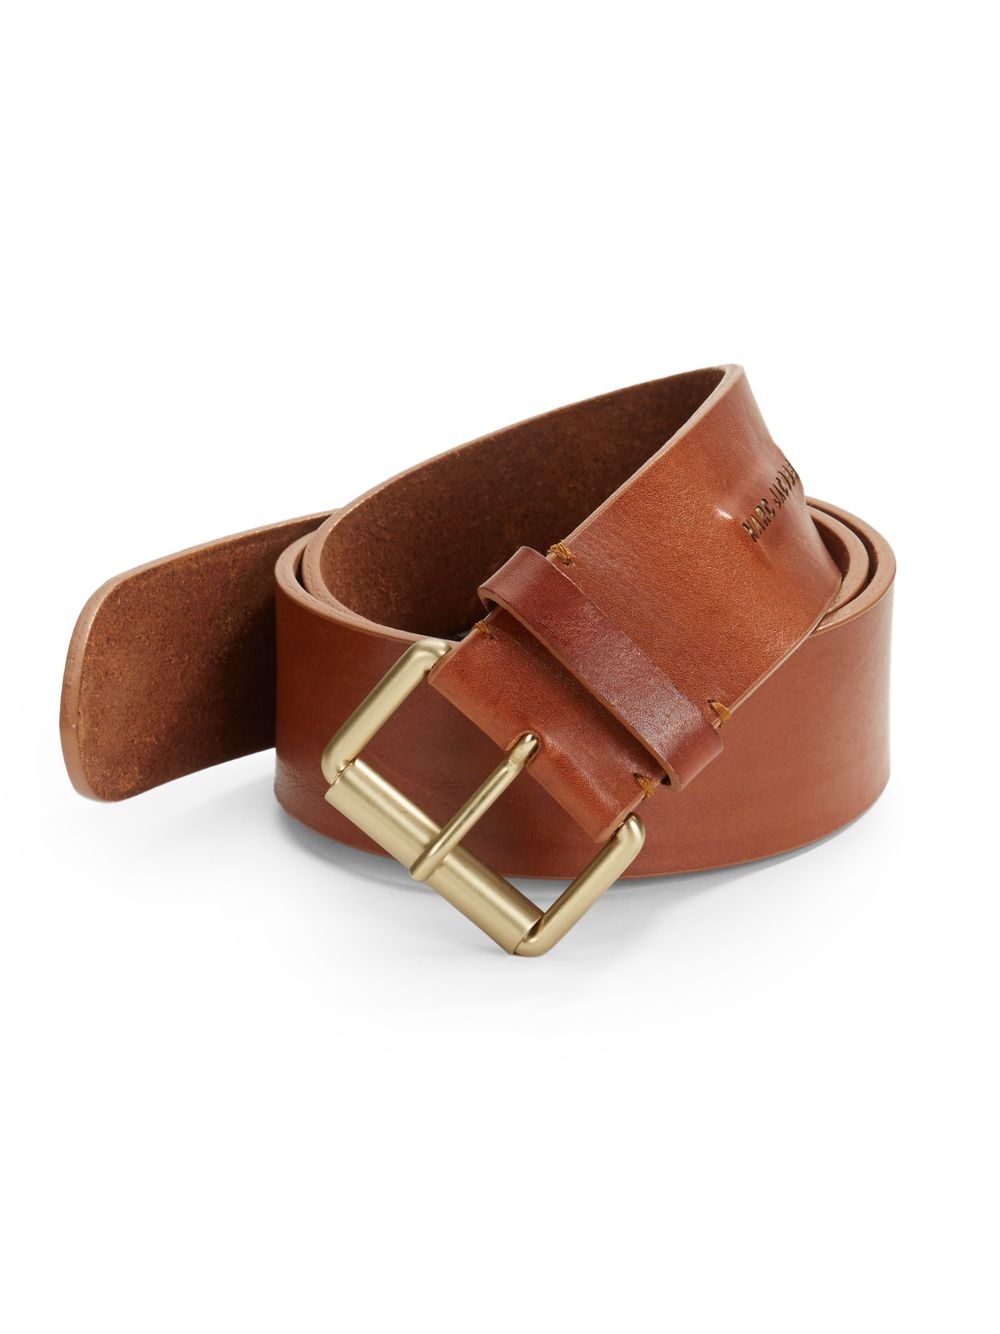 Lyst - Marc Jacobs Monogram Leather Belt in Brown for Men